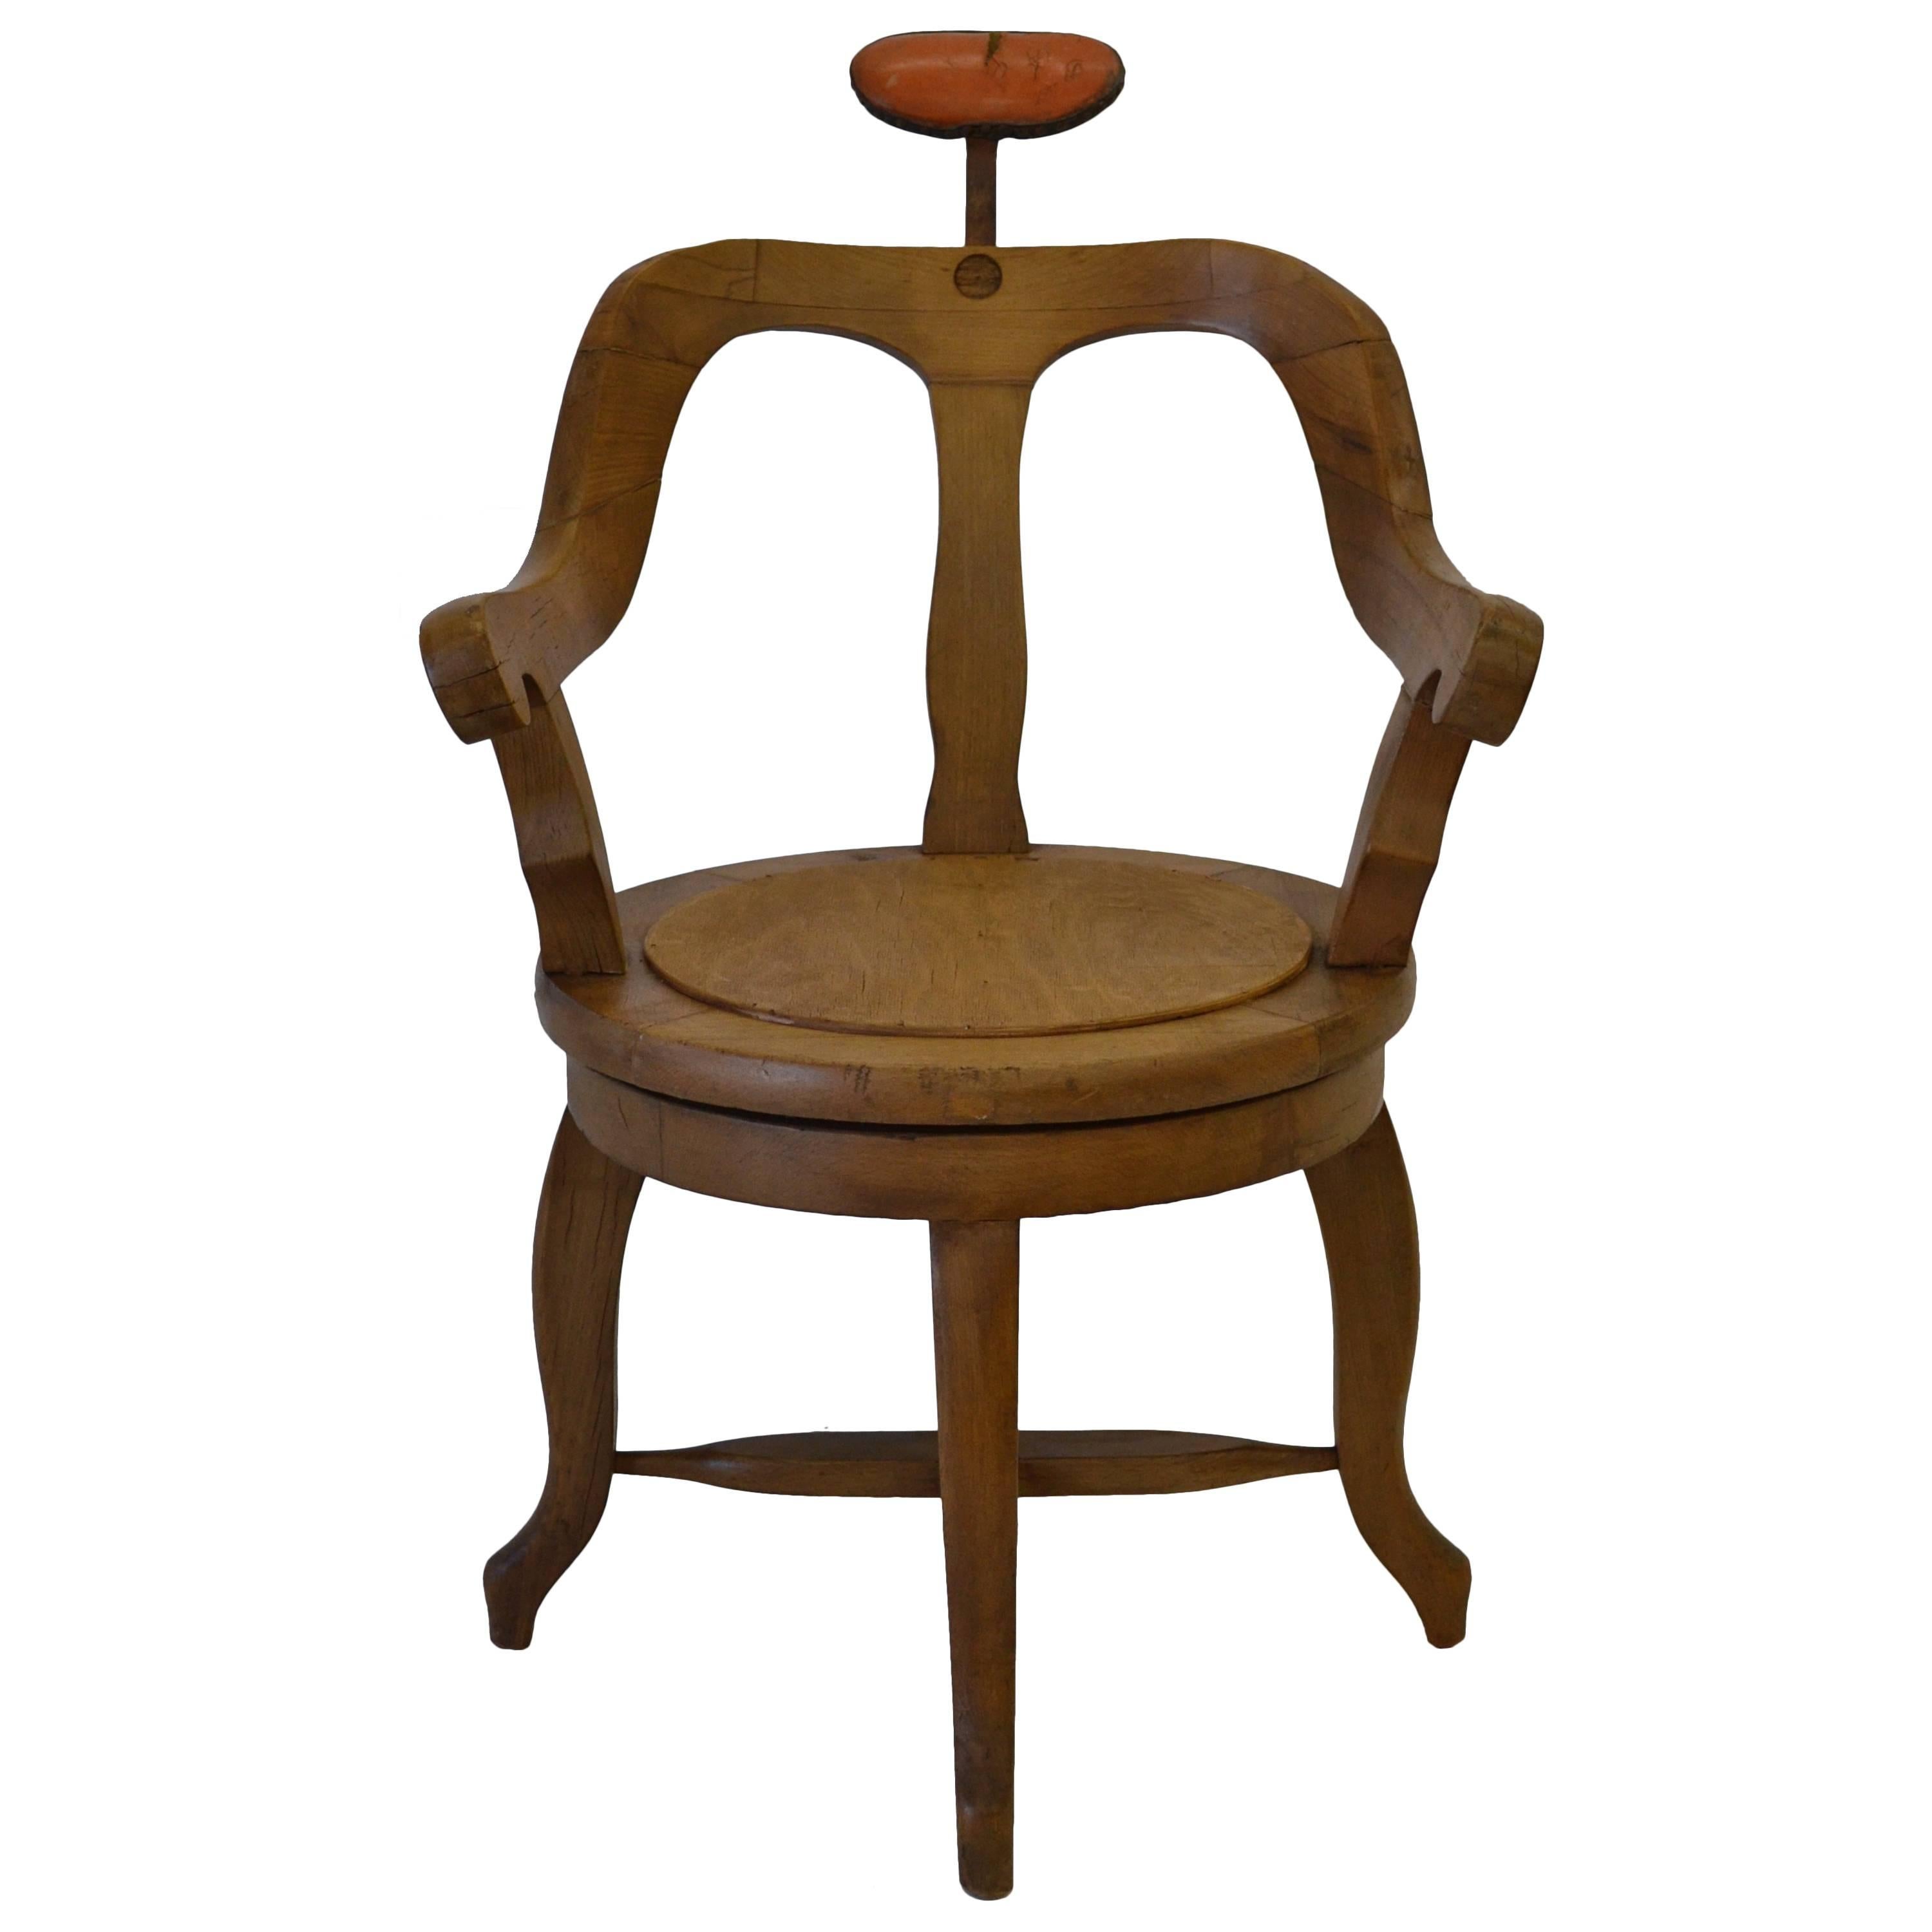  Vintage Revolving Barber's Chair